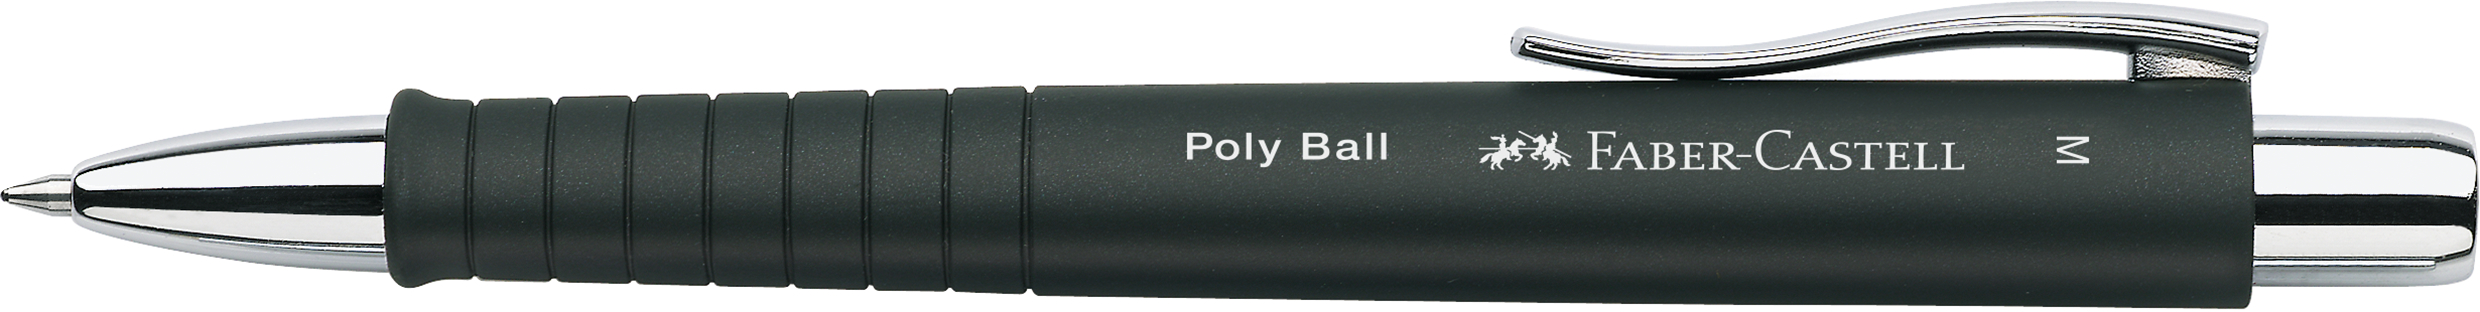 FABER-CASTELL Stylo bille POLY BALL 0.5mm 241199 noir